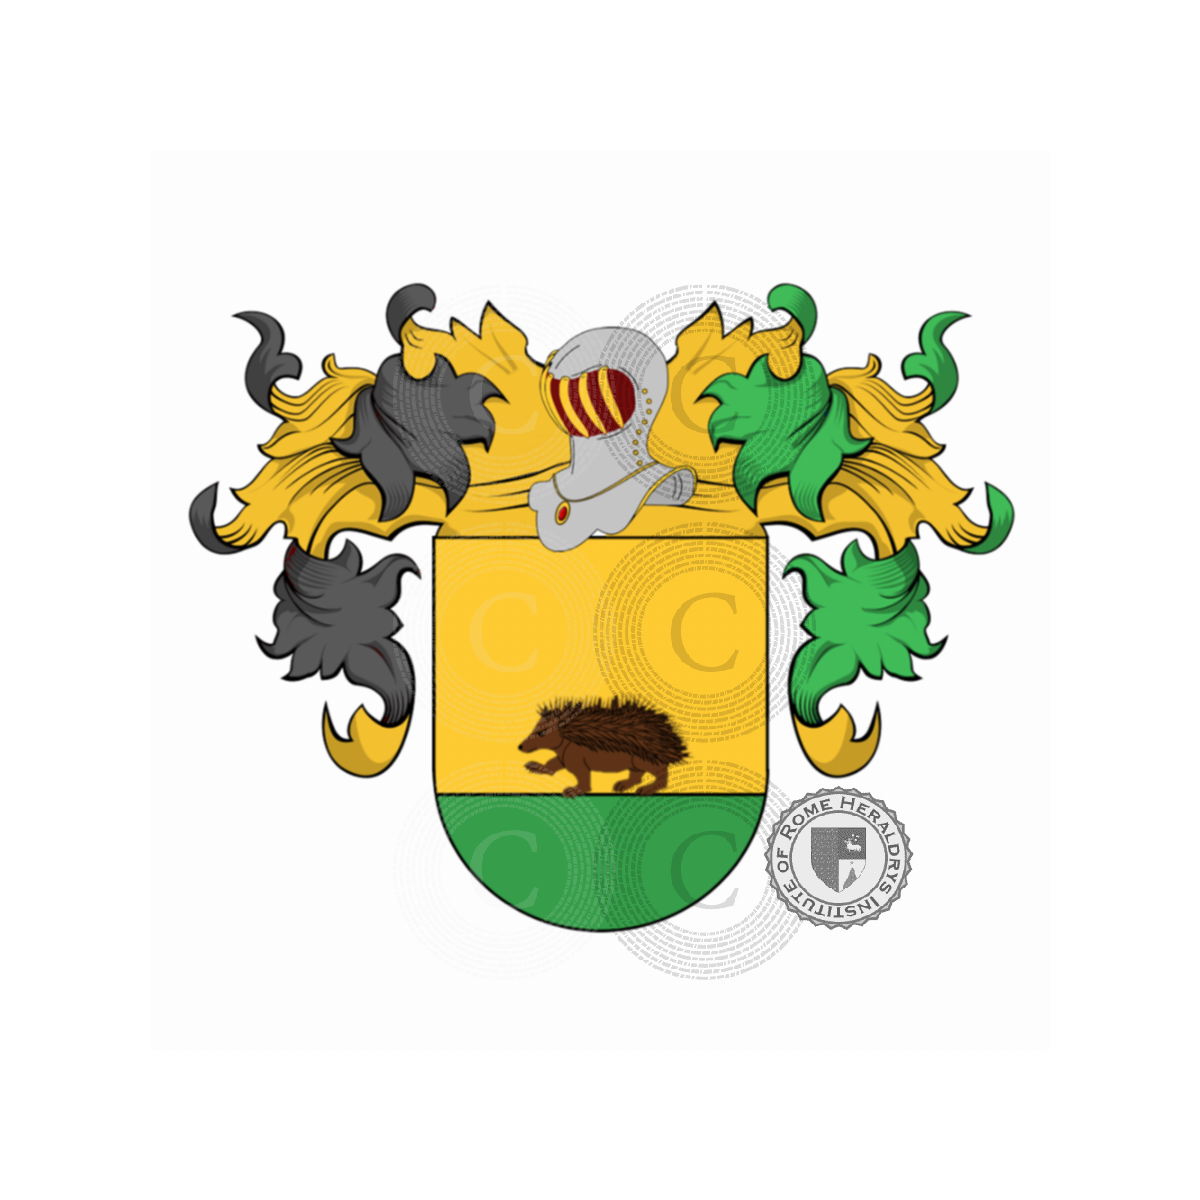 Wappen der FamiliePoggi